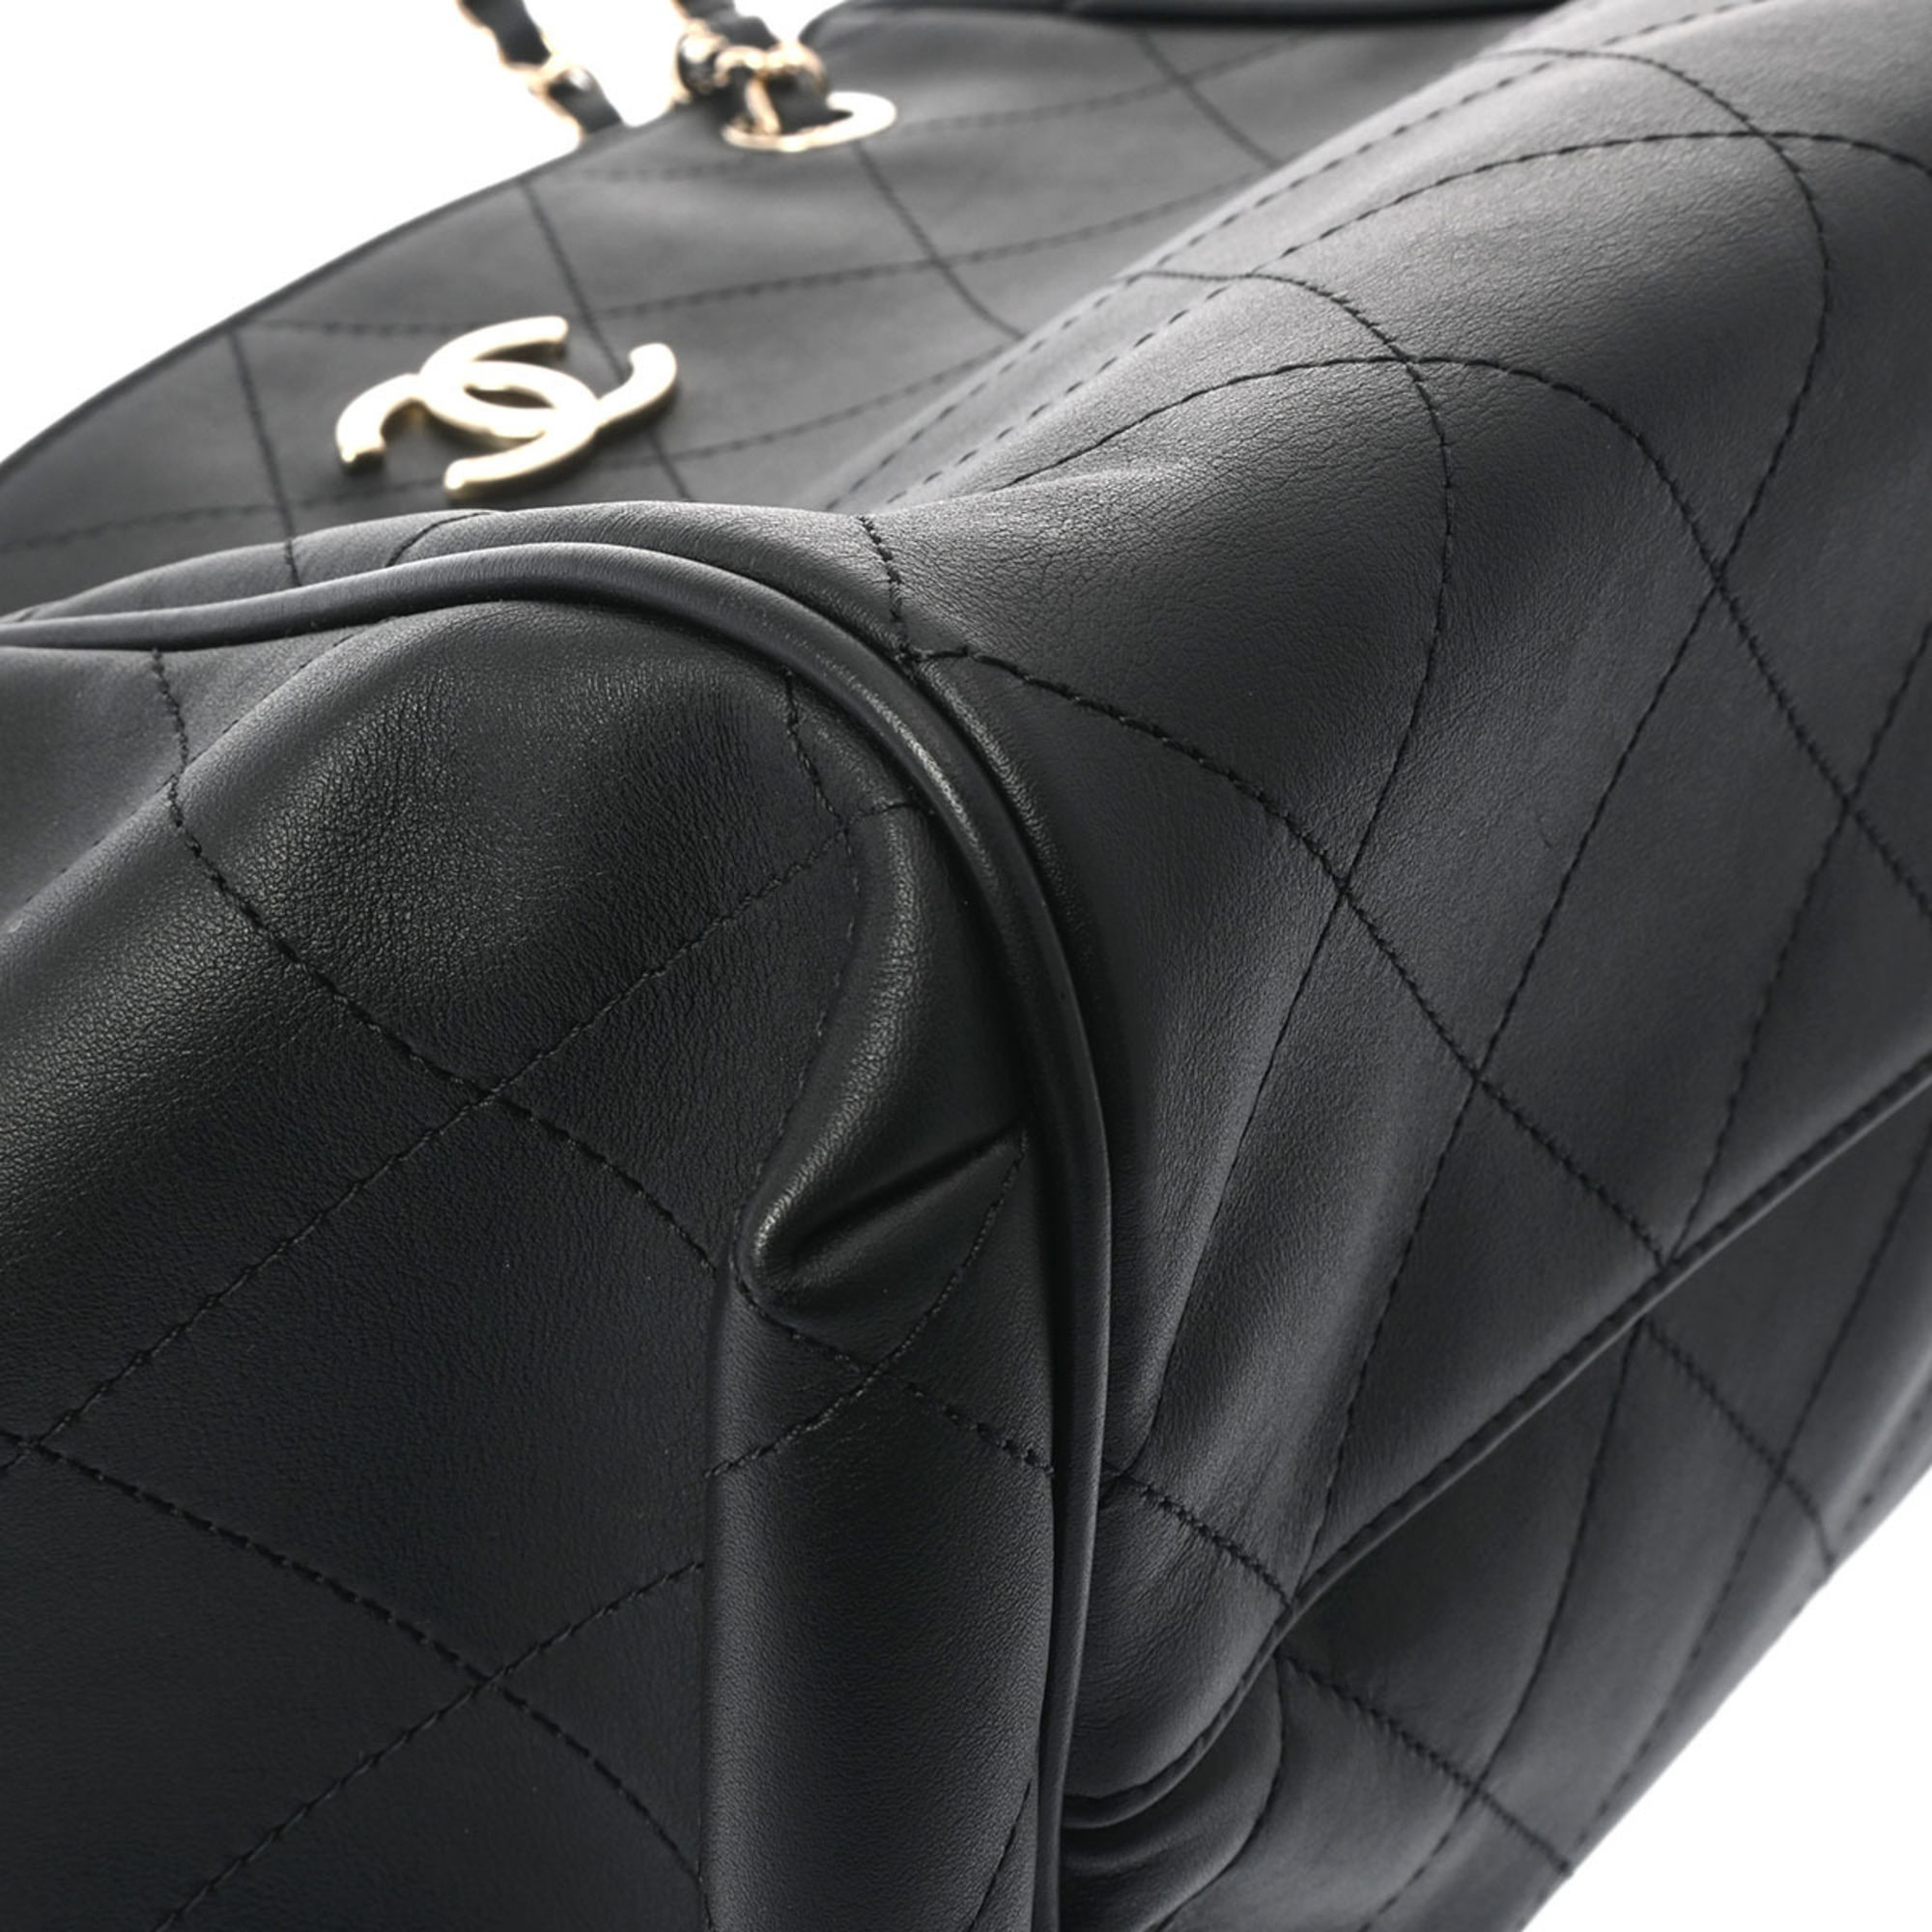 CHANEL Chanel Matelasse Chain Tote Black Champagne - Women's Leather Handbag